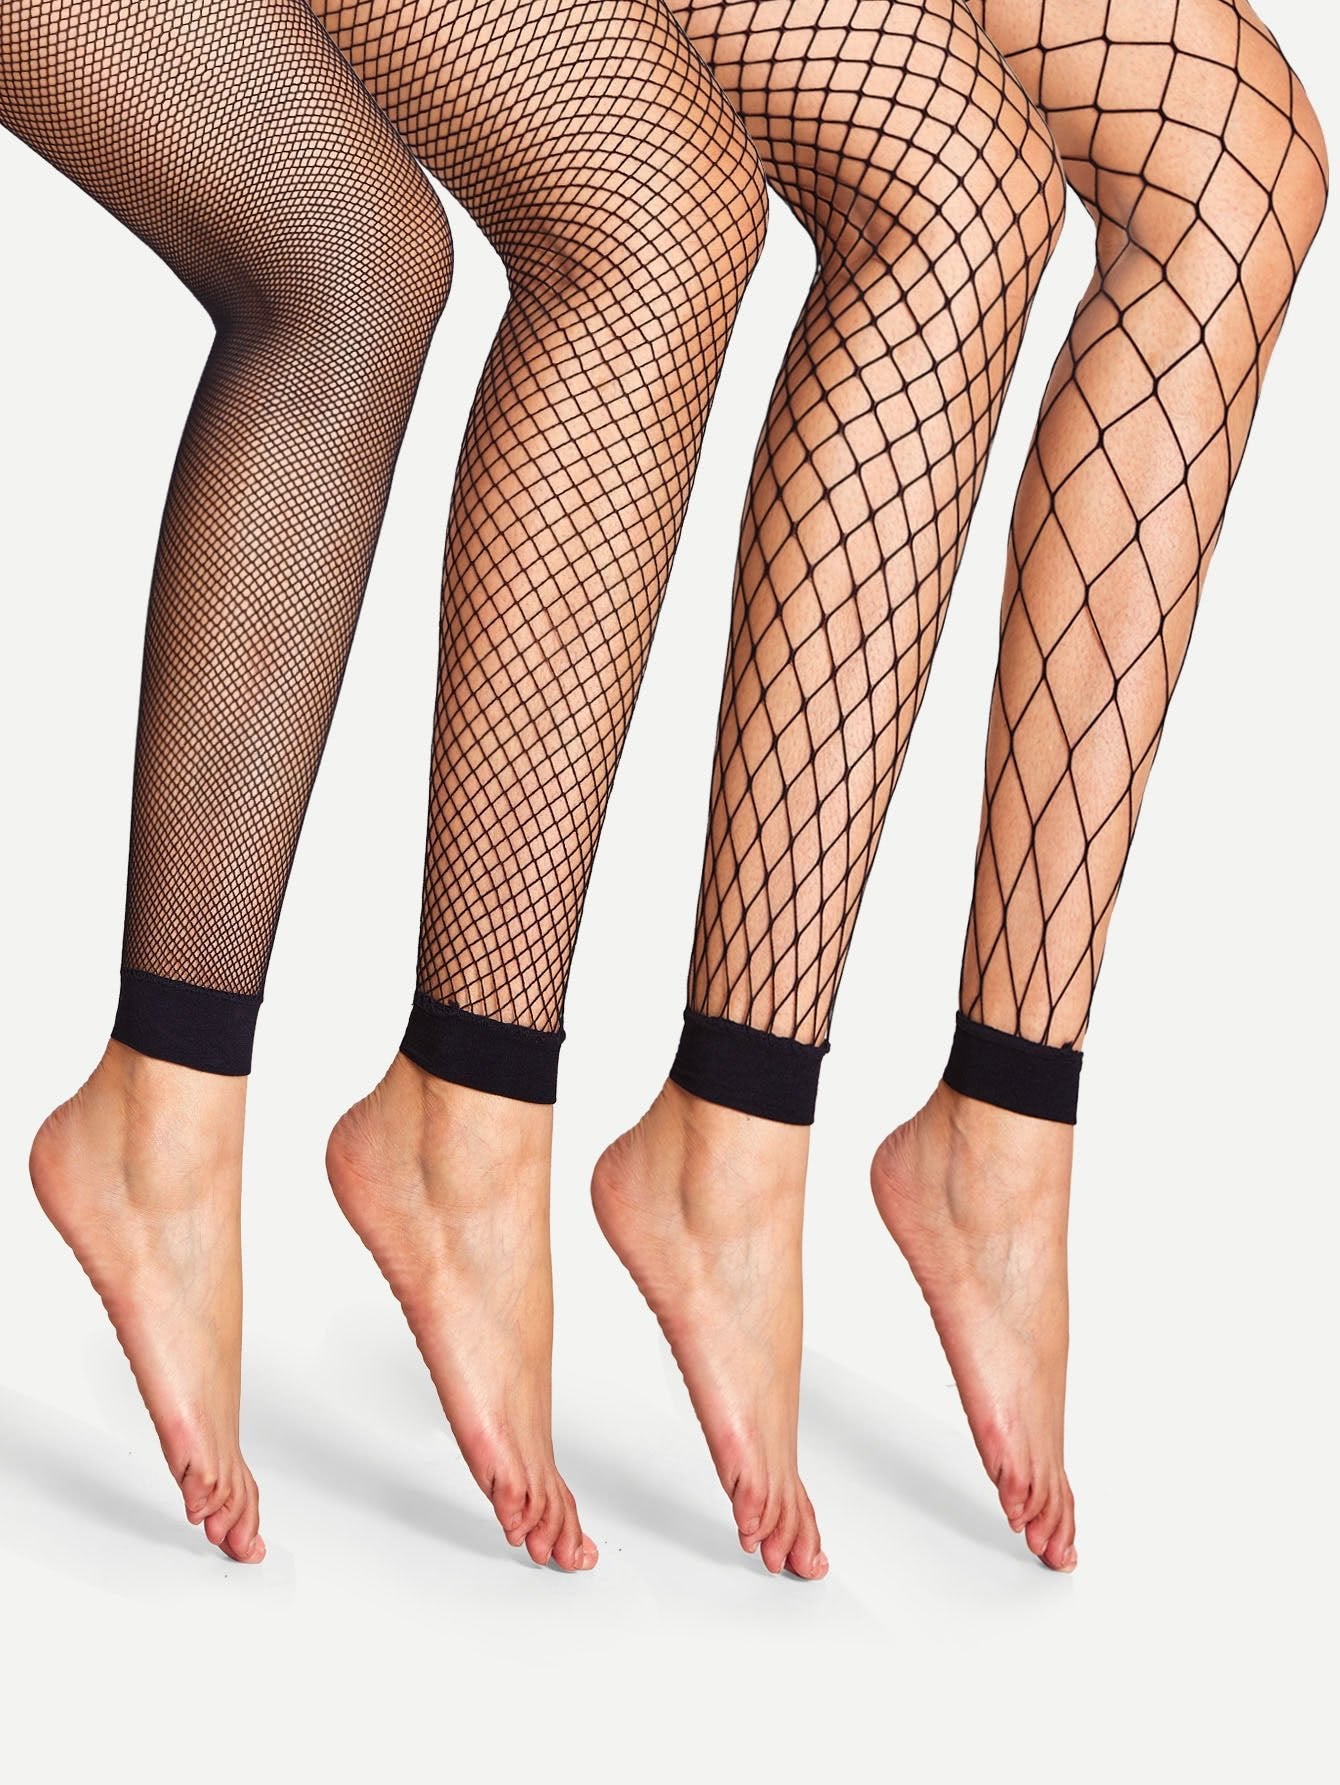 4pairs High-Rise Fishnet Design Stockings, Black Tights - Negative Apparel